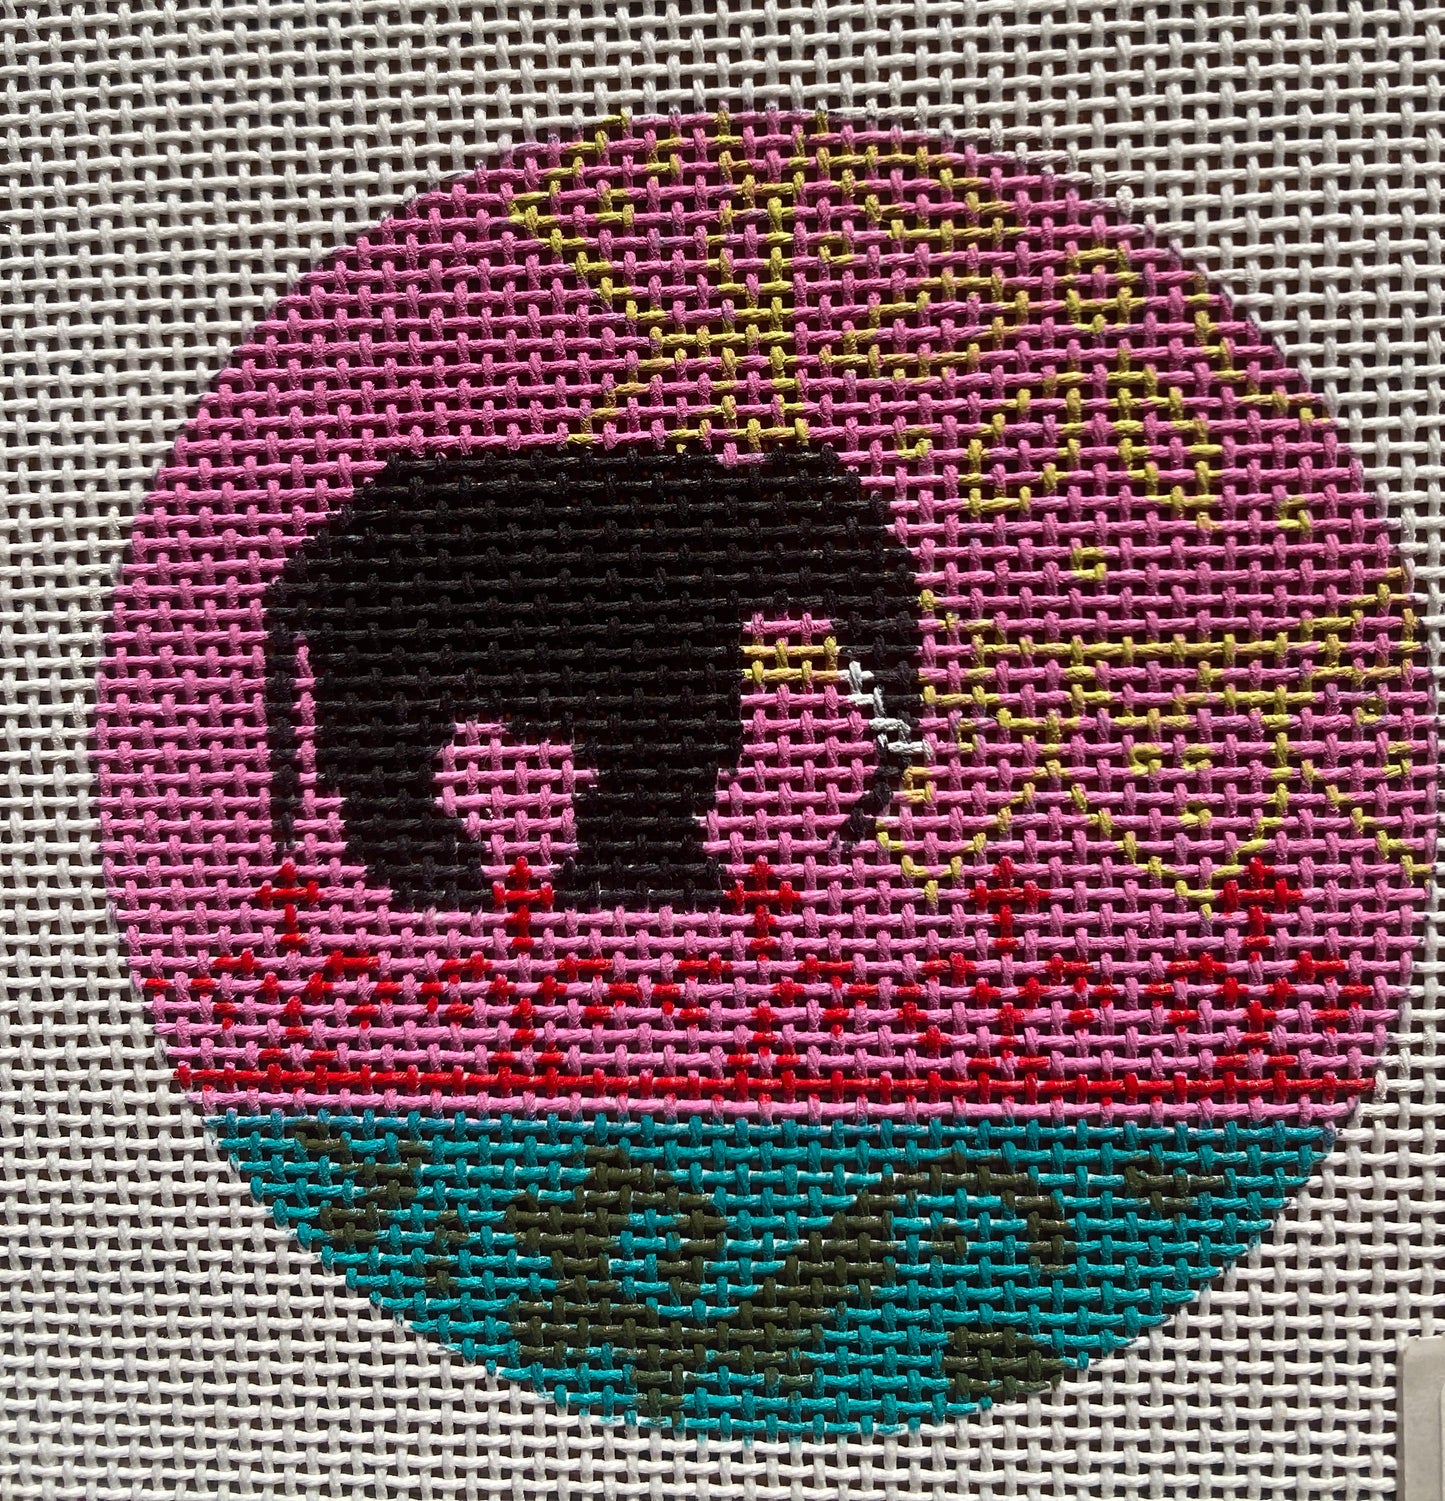 Elephant/Indian pattern